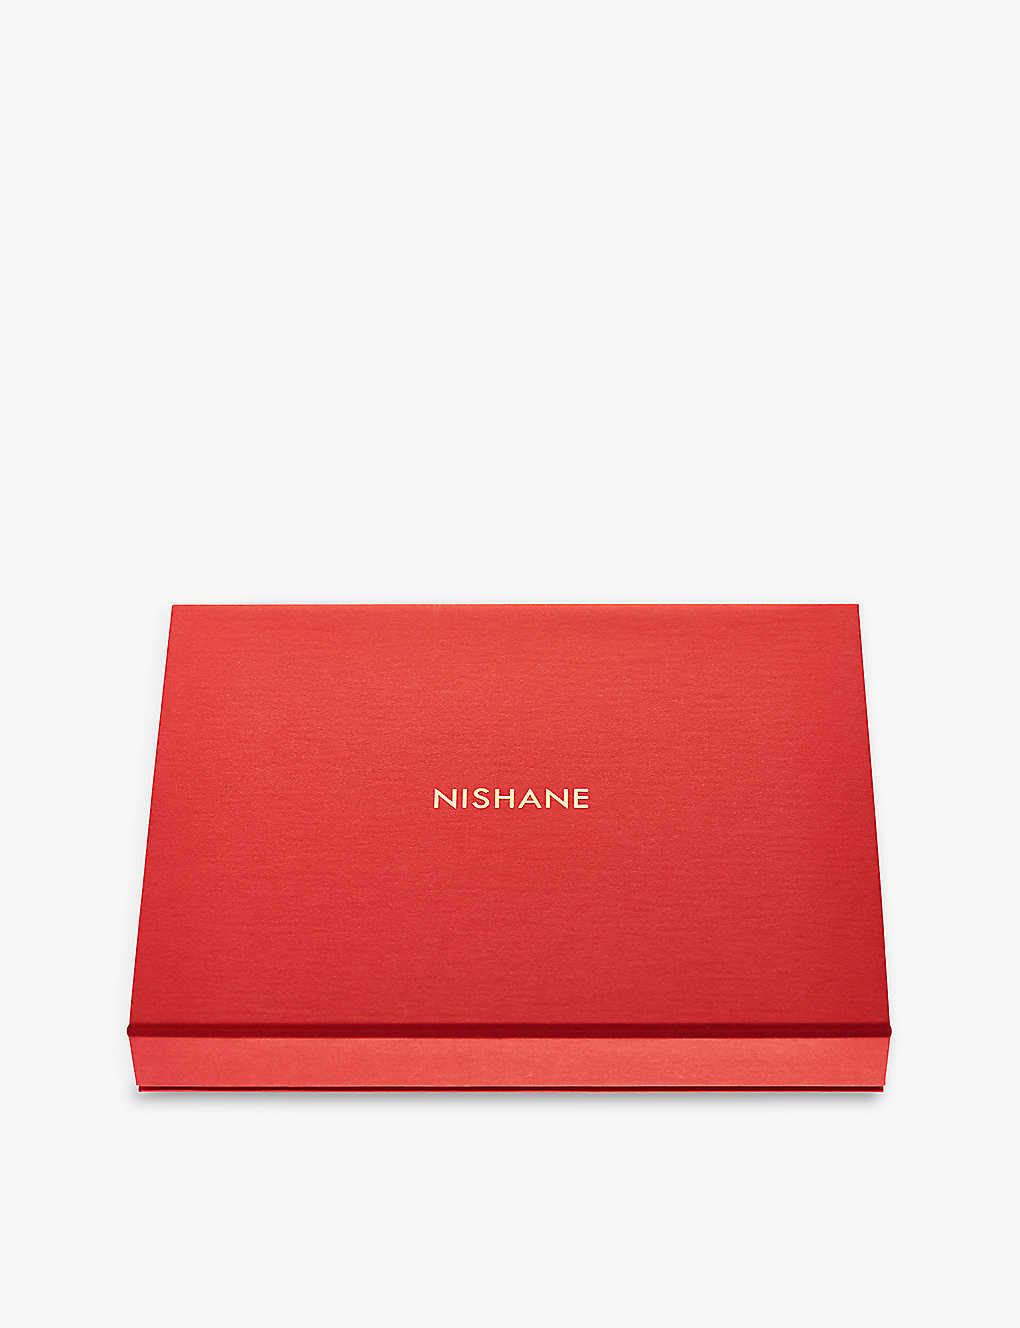 Nishane Discovery Set Extrait De Parfum Gift Set